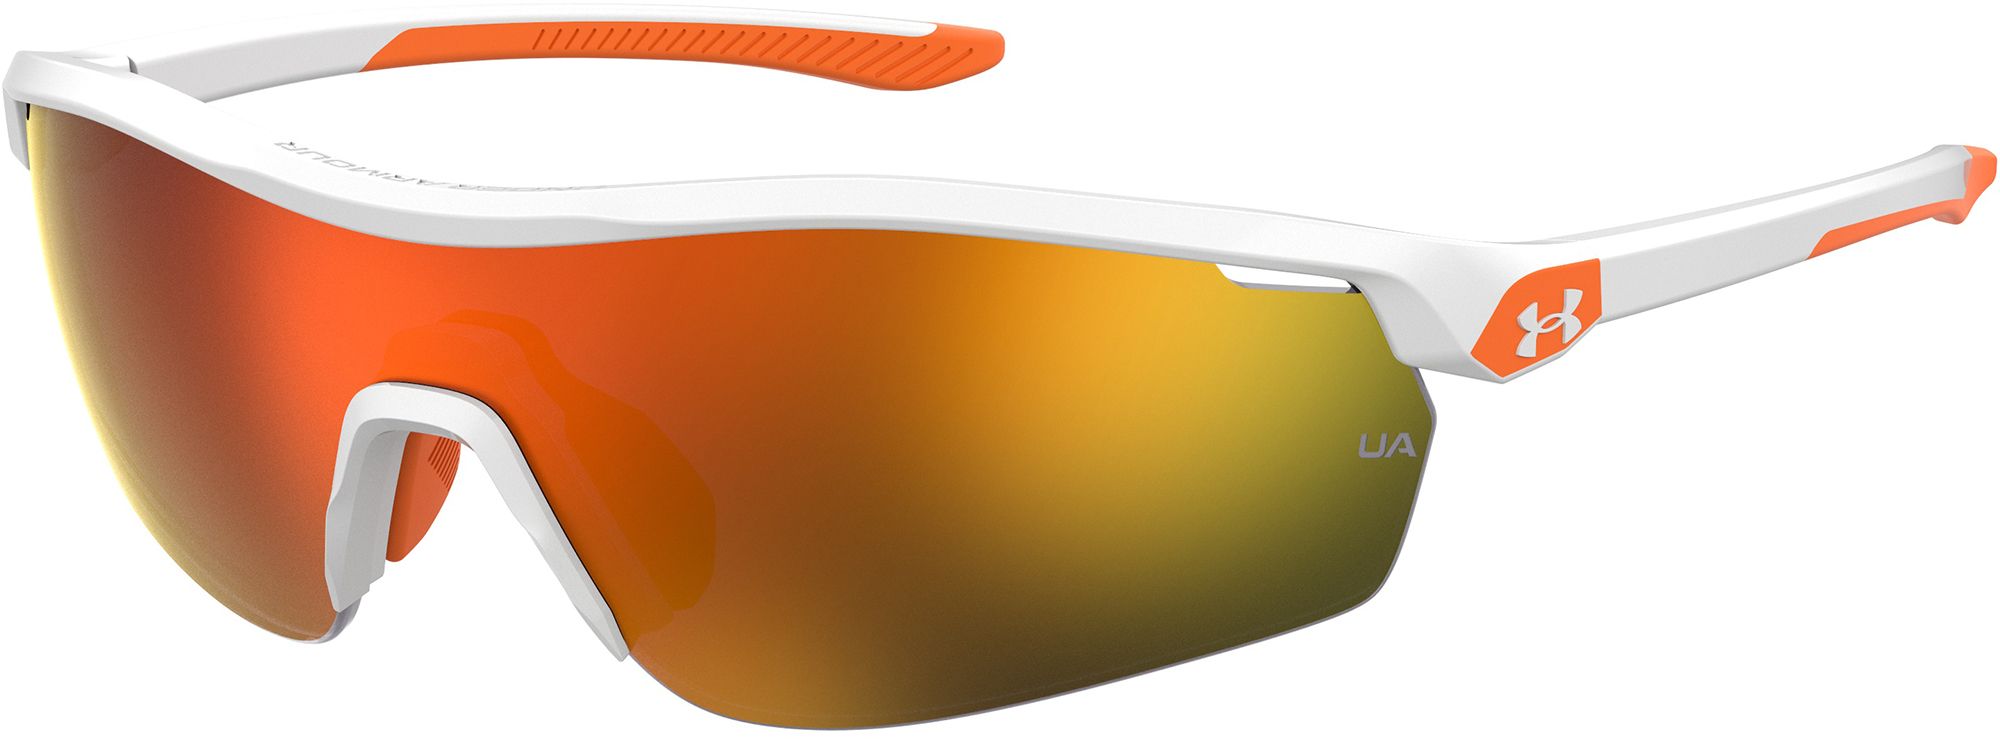 Under Armour Gametime Jr. Tuned Baseball Sunglasses Accessories Under Armour Solid White/Orange Tips/Baseball Tuned Orange Mirror  